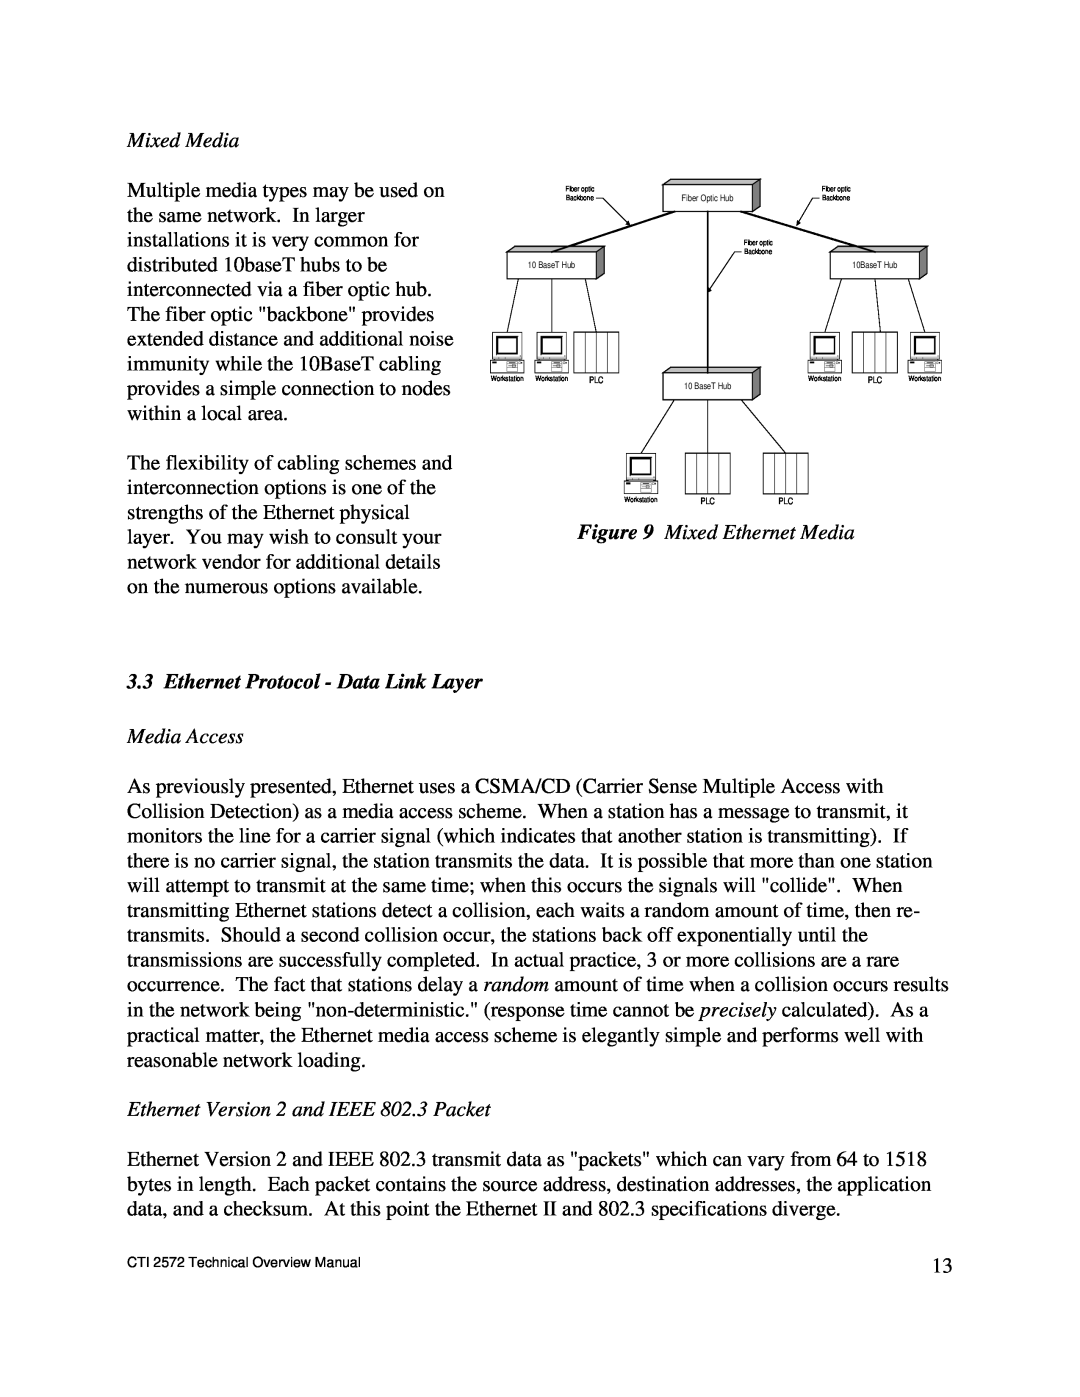 IBM CTI 2572 manual Ethernet Protocol - Data Link Layer 